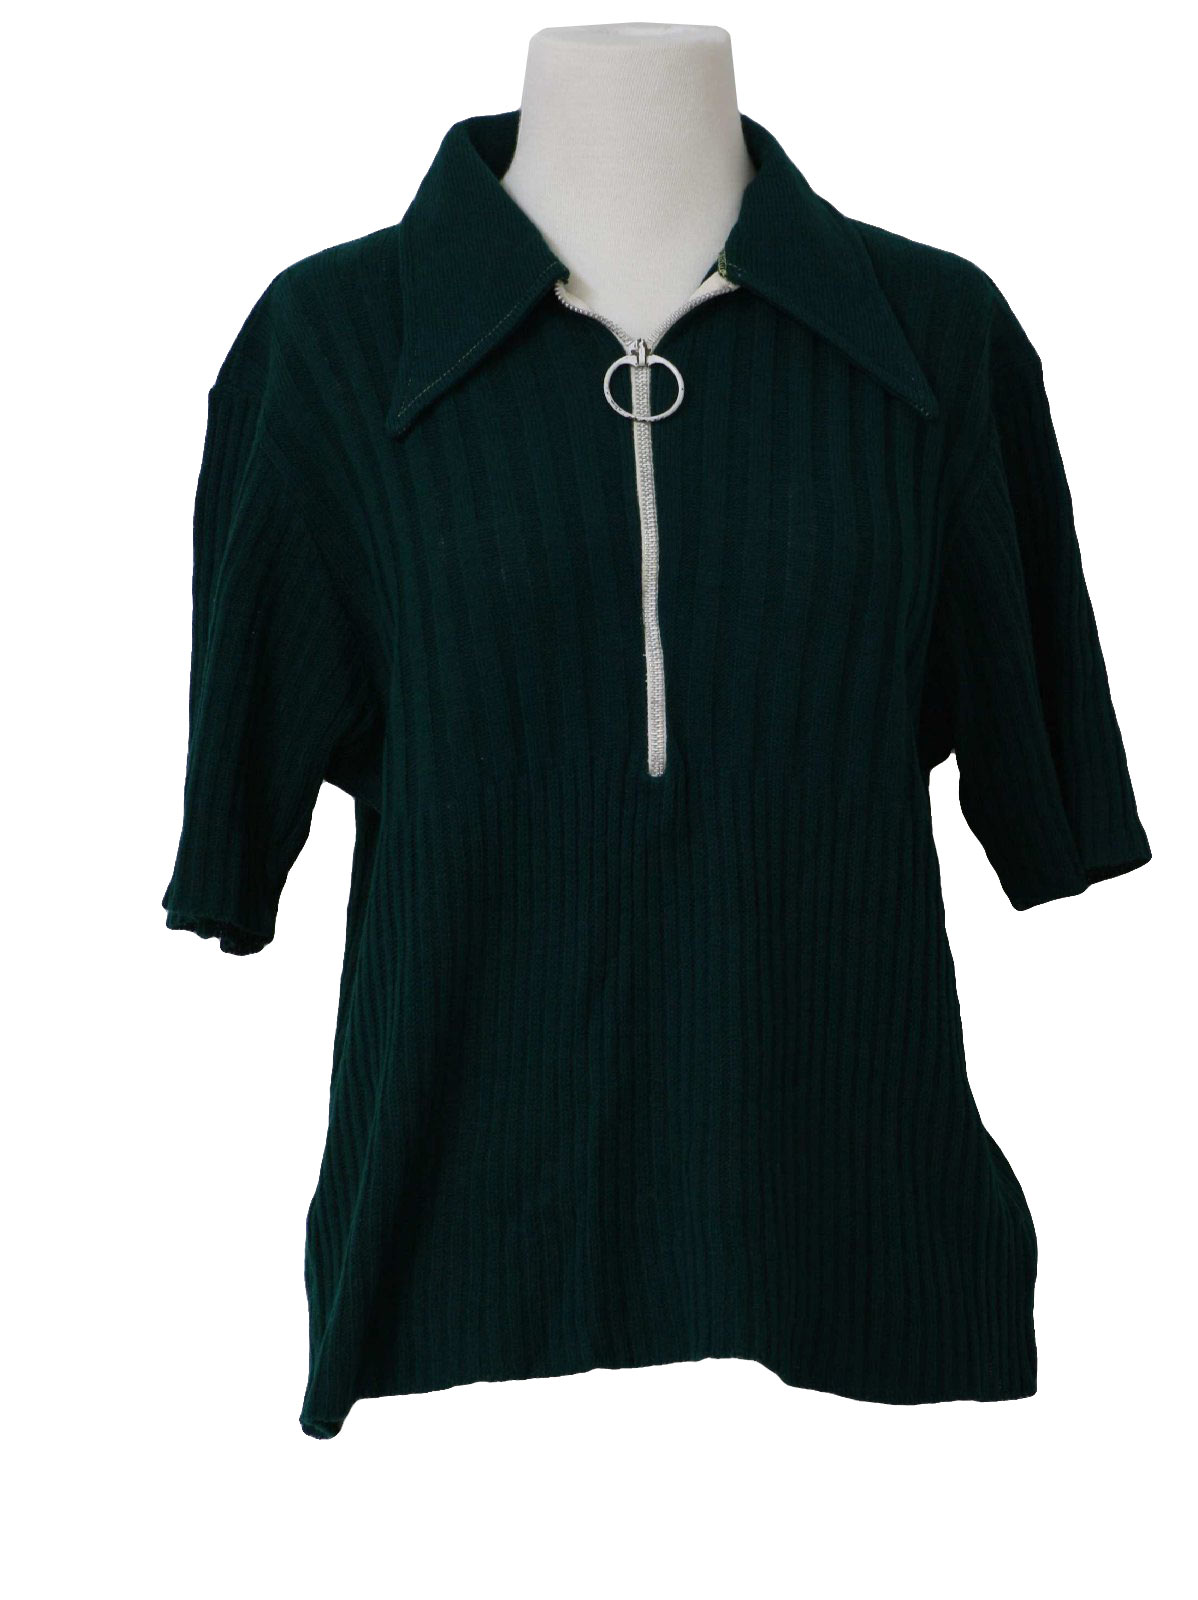 70s Retro Sweater: 70s -no label- Womens hunter green acrylic knit ...